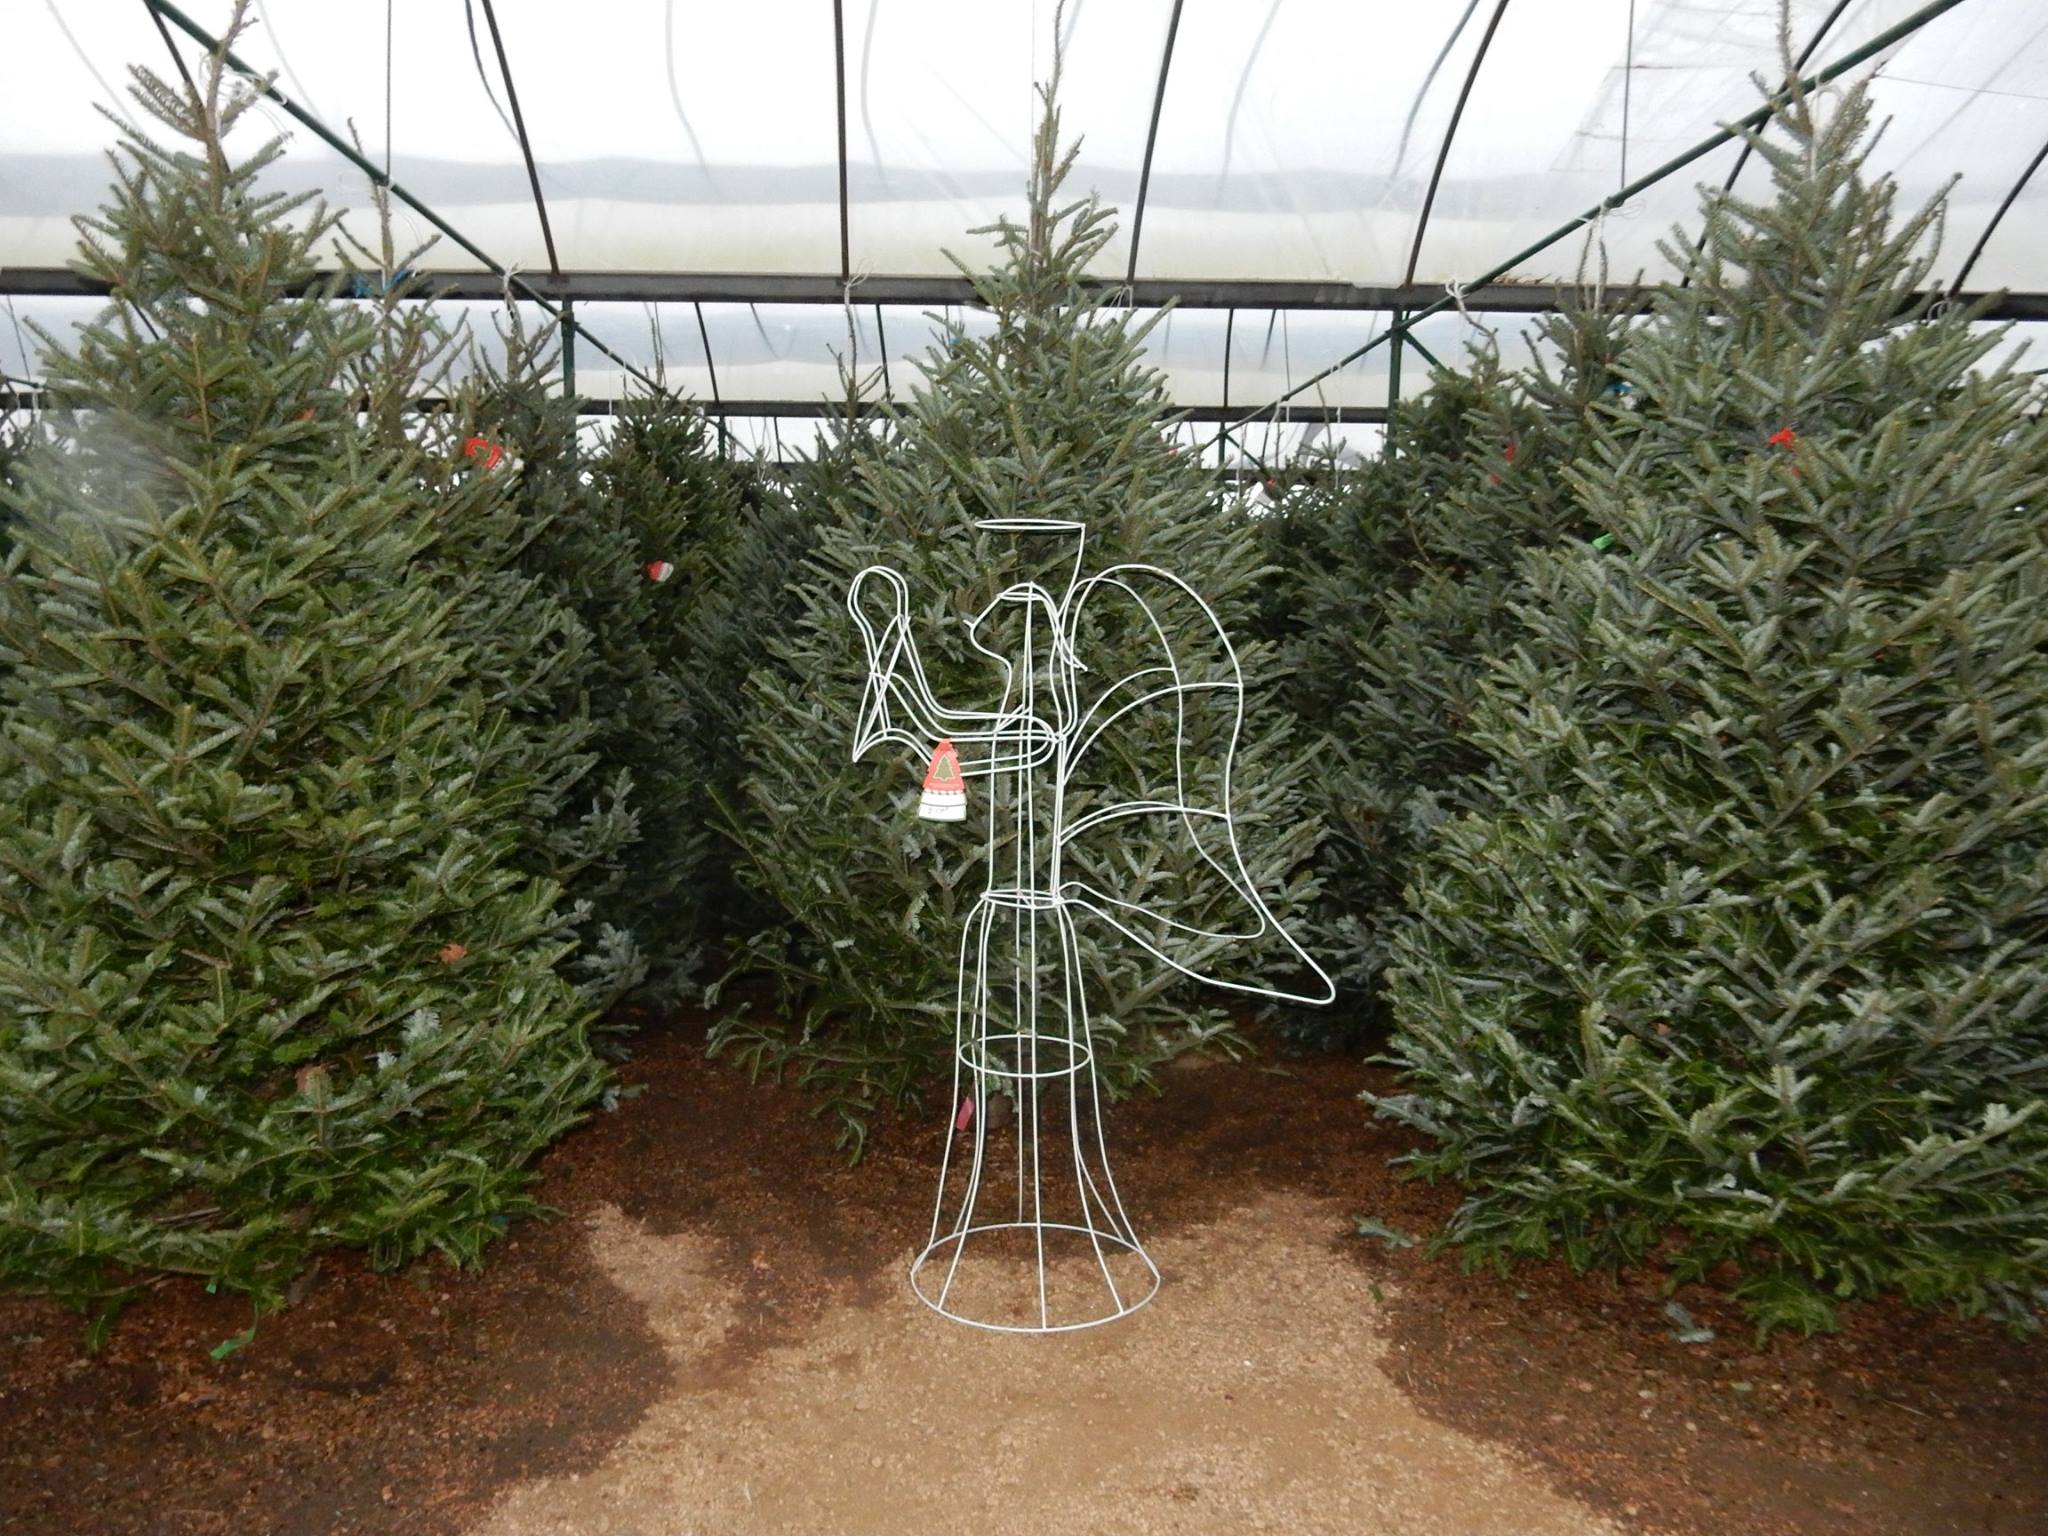 Fraser Fir Christmas Trees at J&J Nursery, Spring, TX